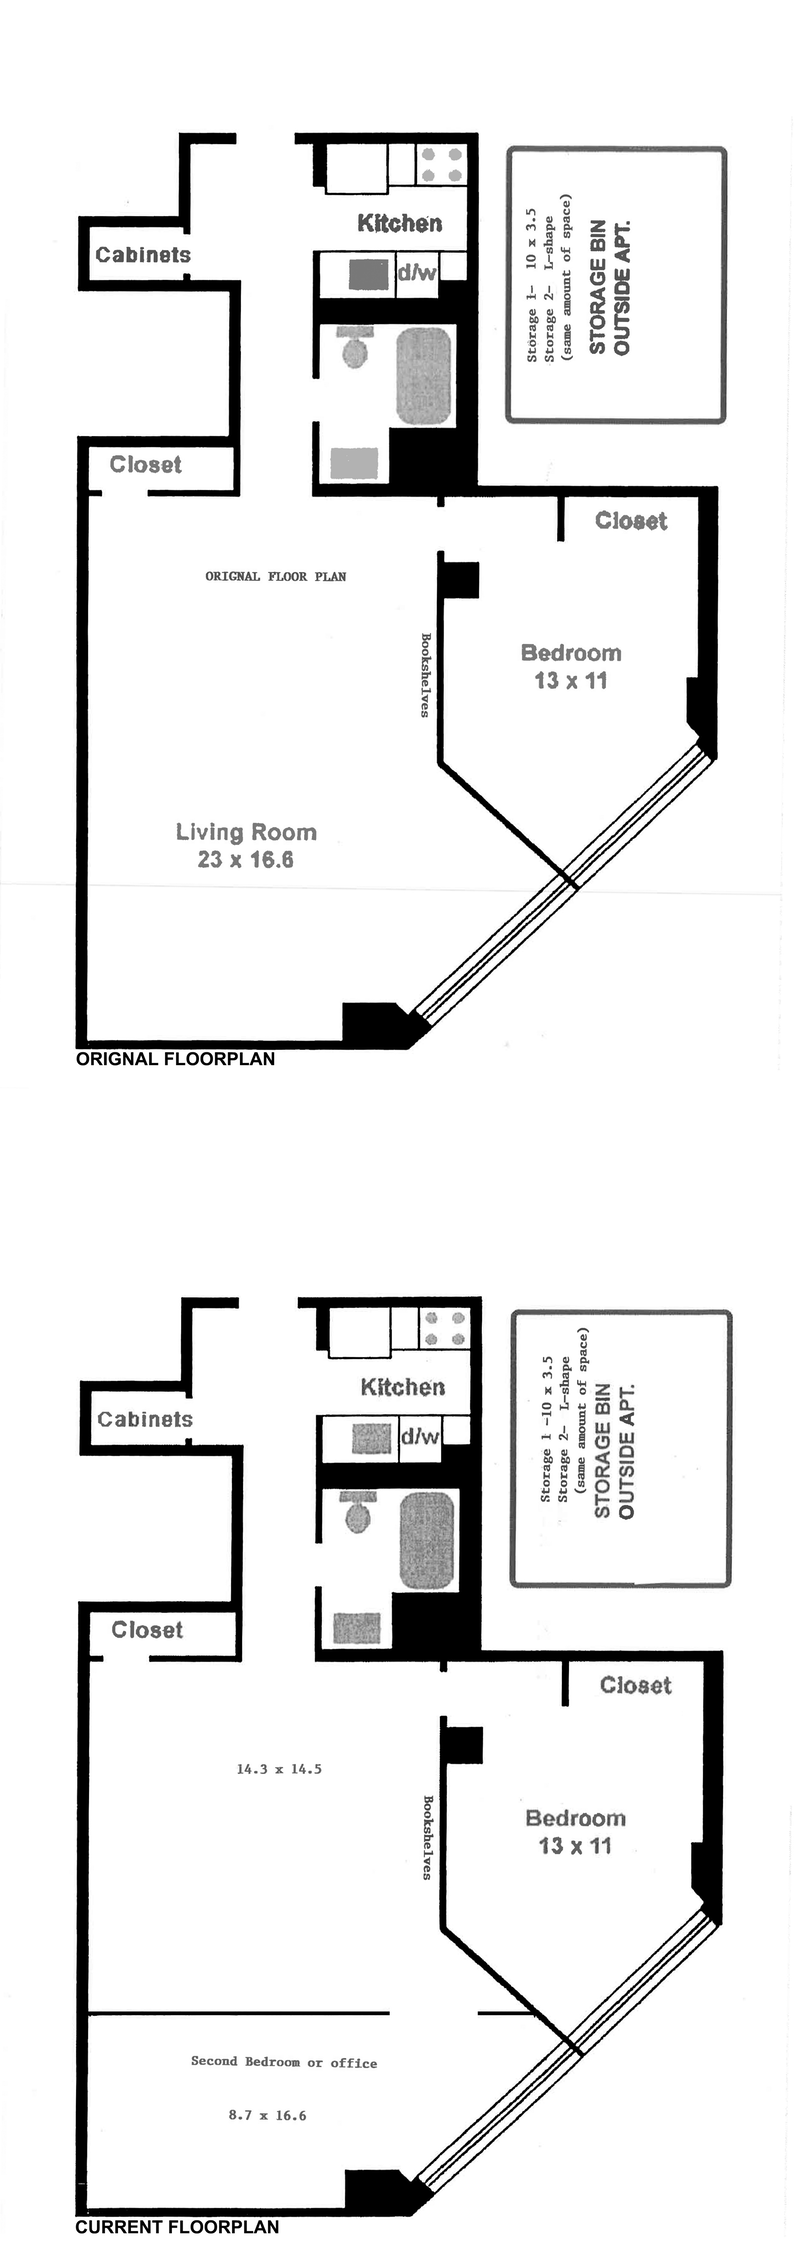 Floorplan for 310 East 46th Street, 5A